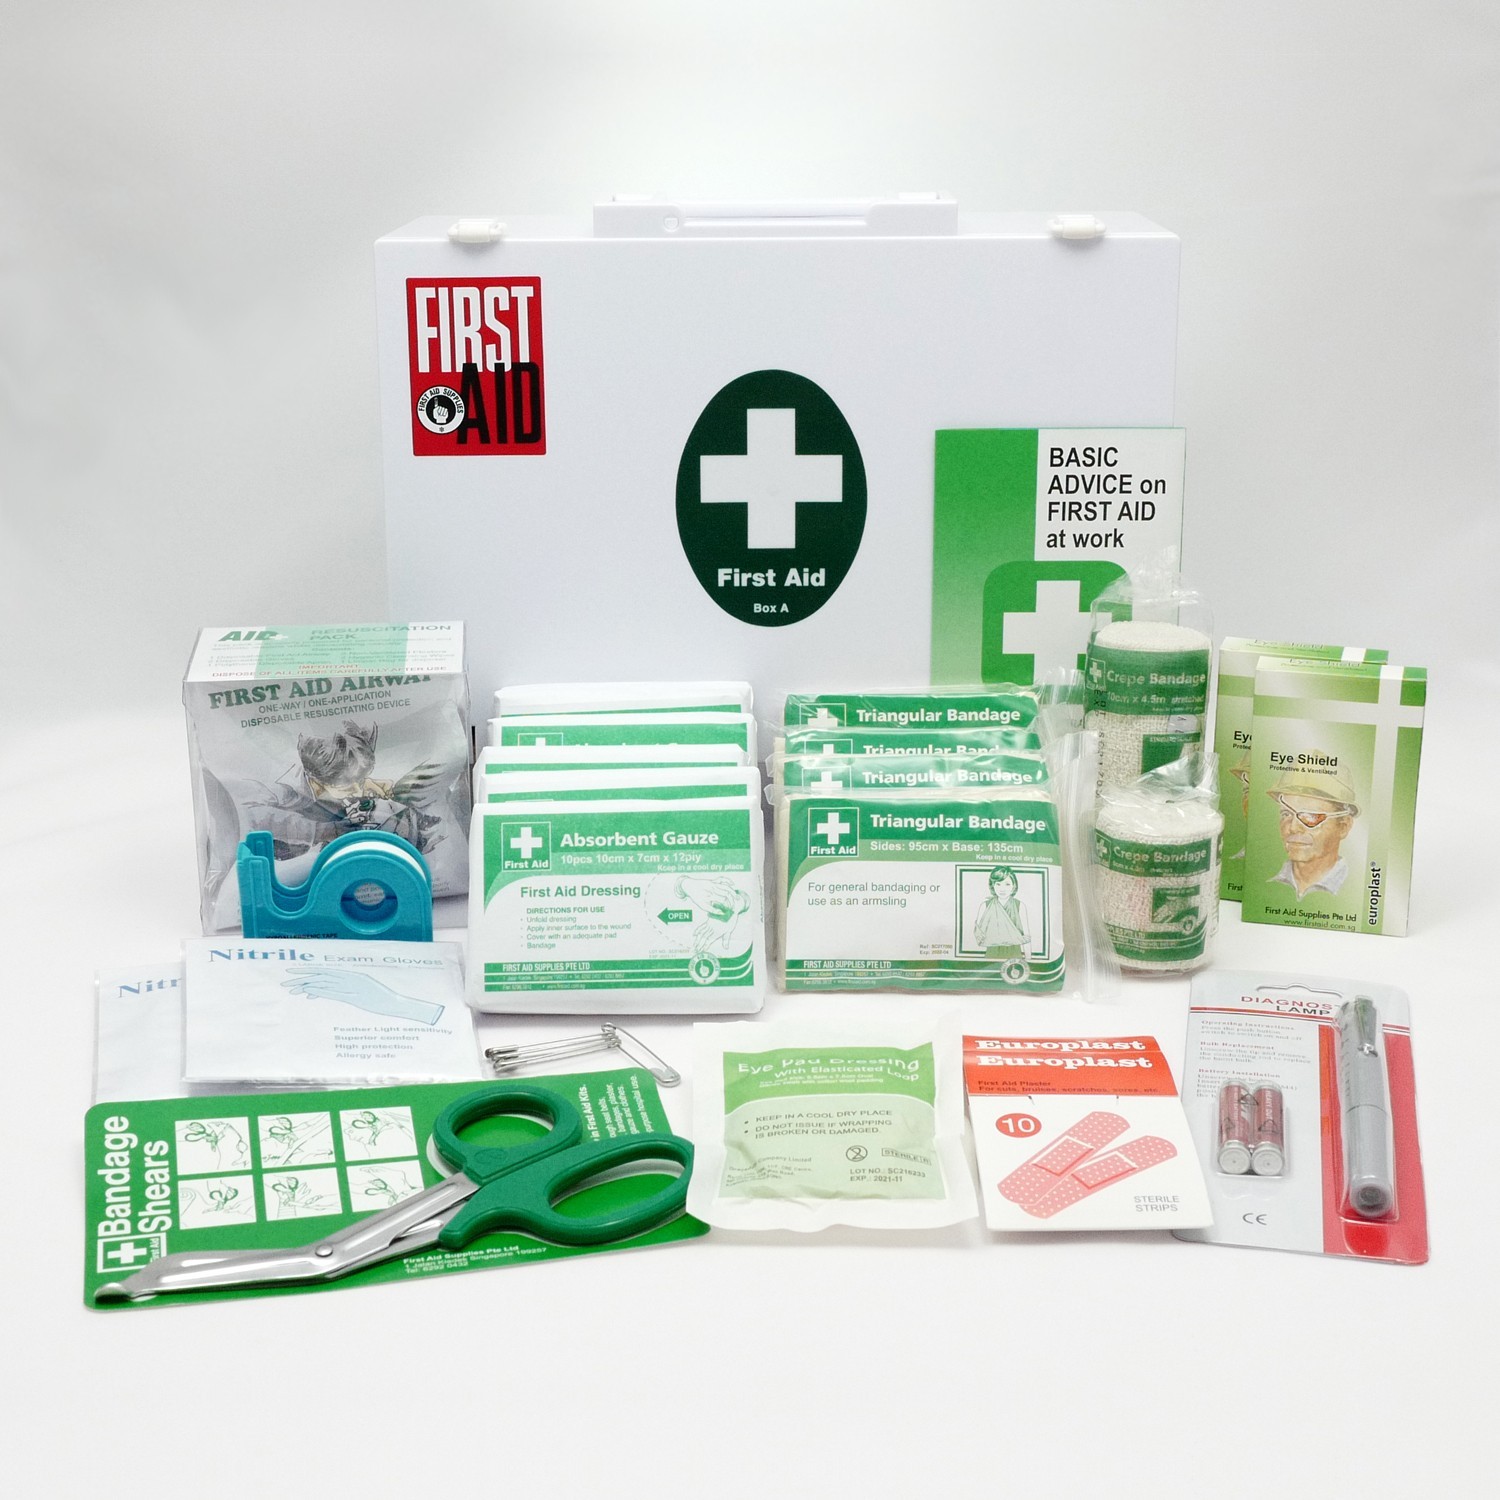 first aid box contains